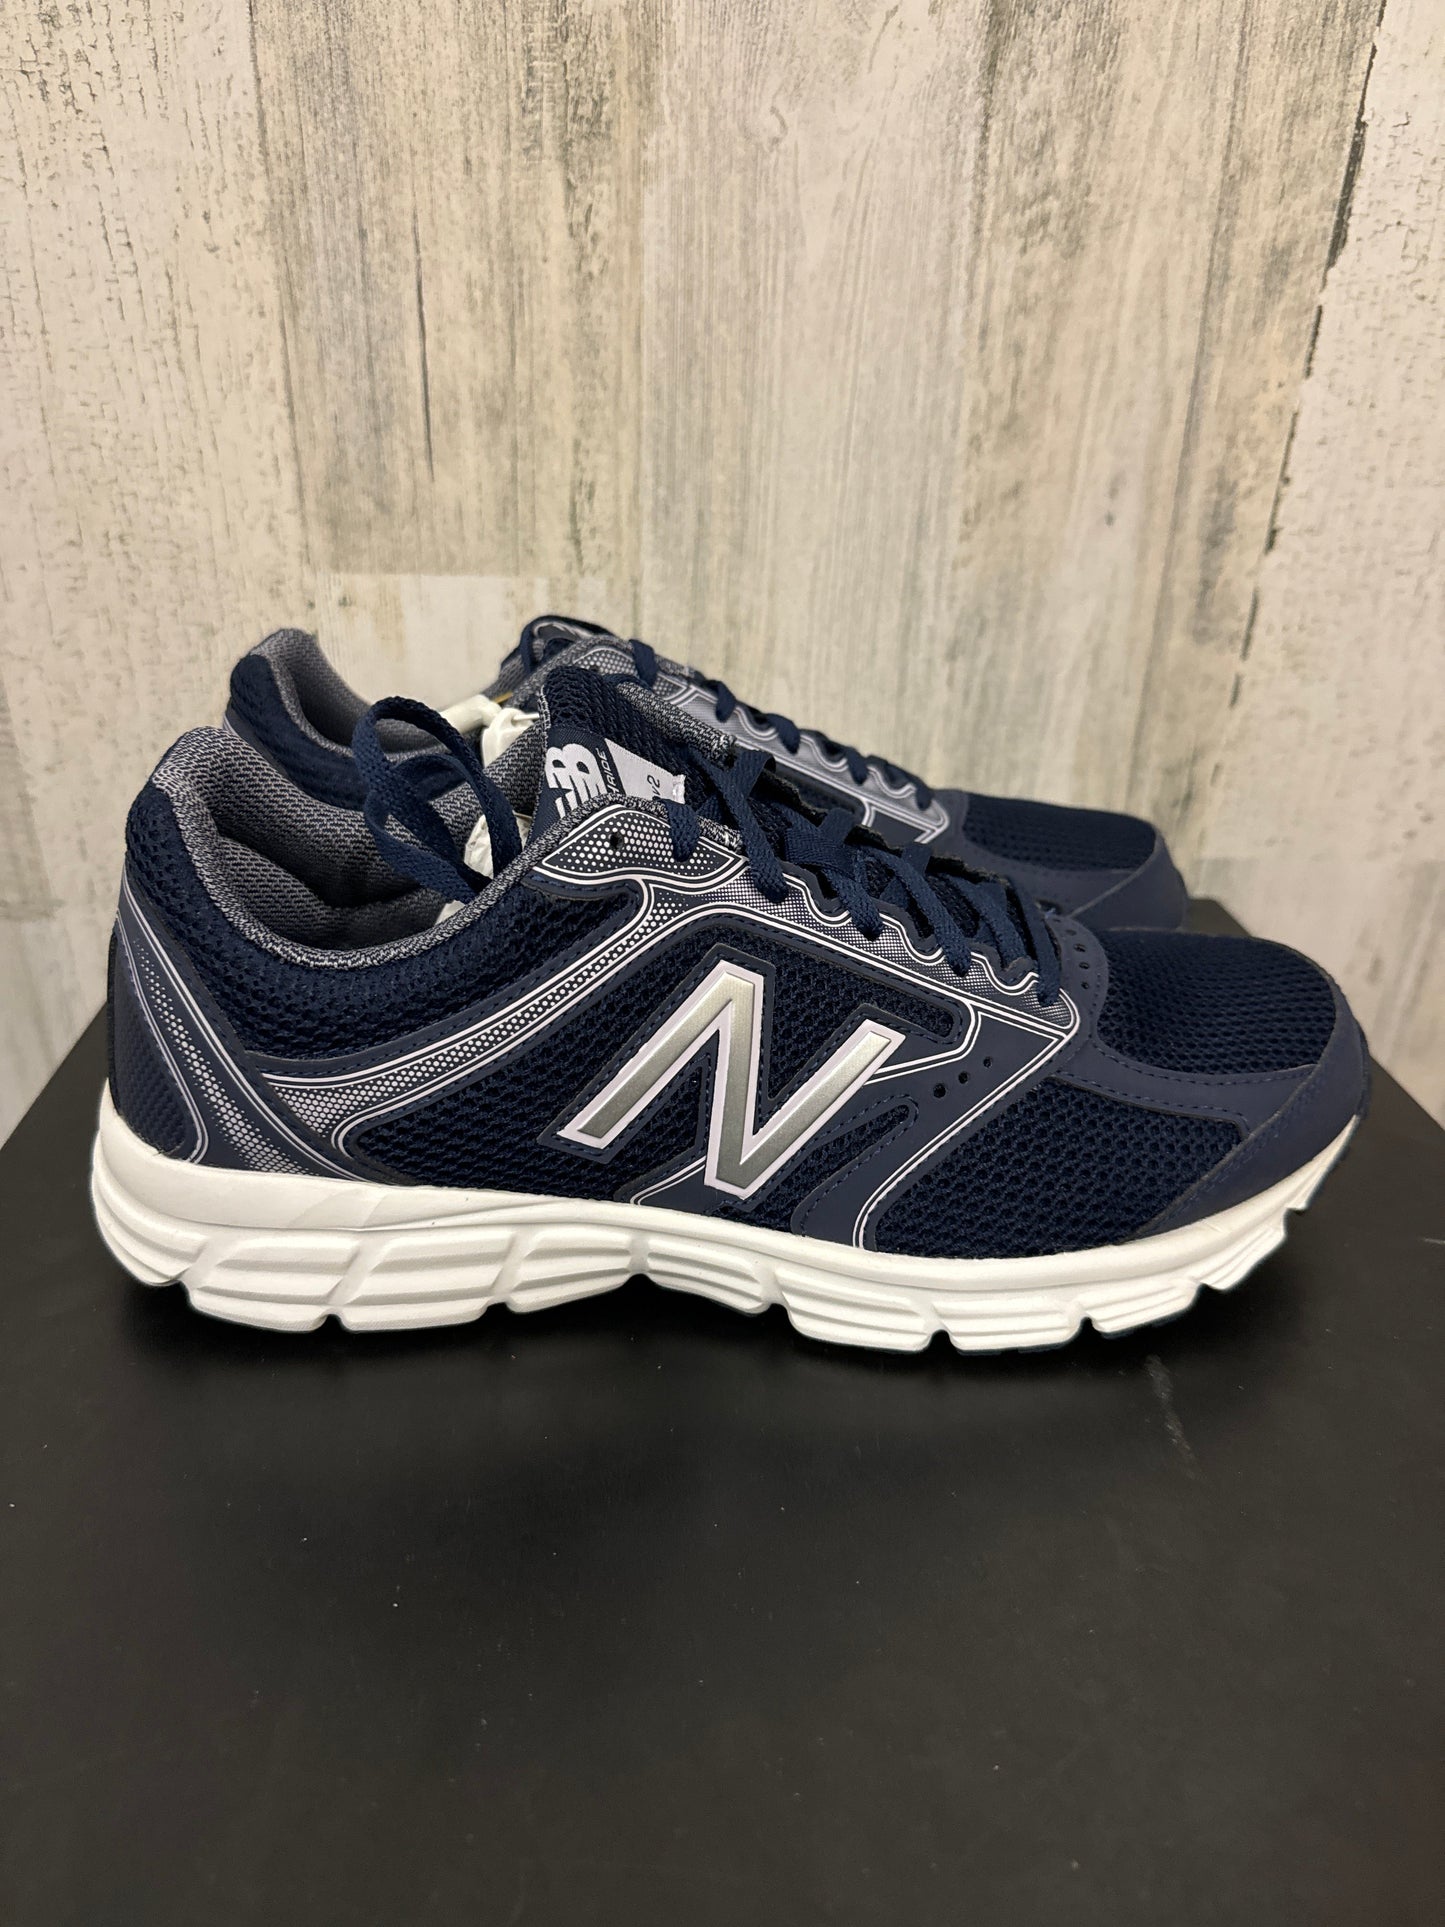 Navy Shoes Athletic New Balance, Size 11